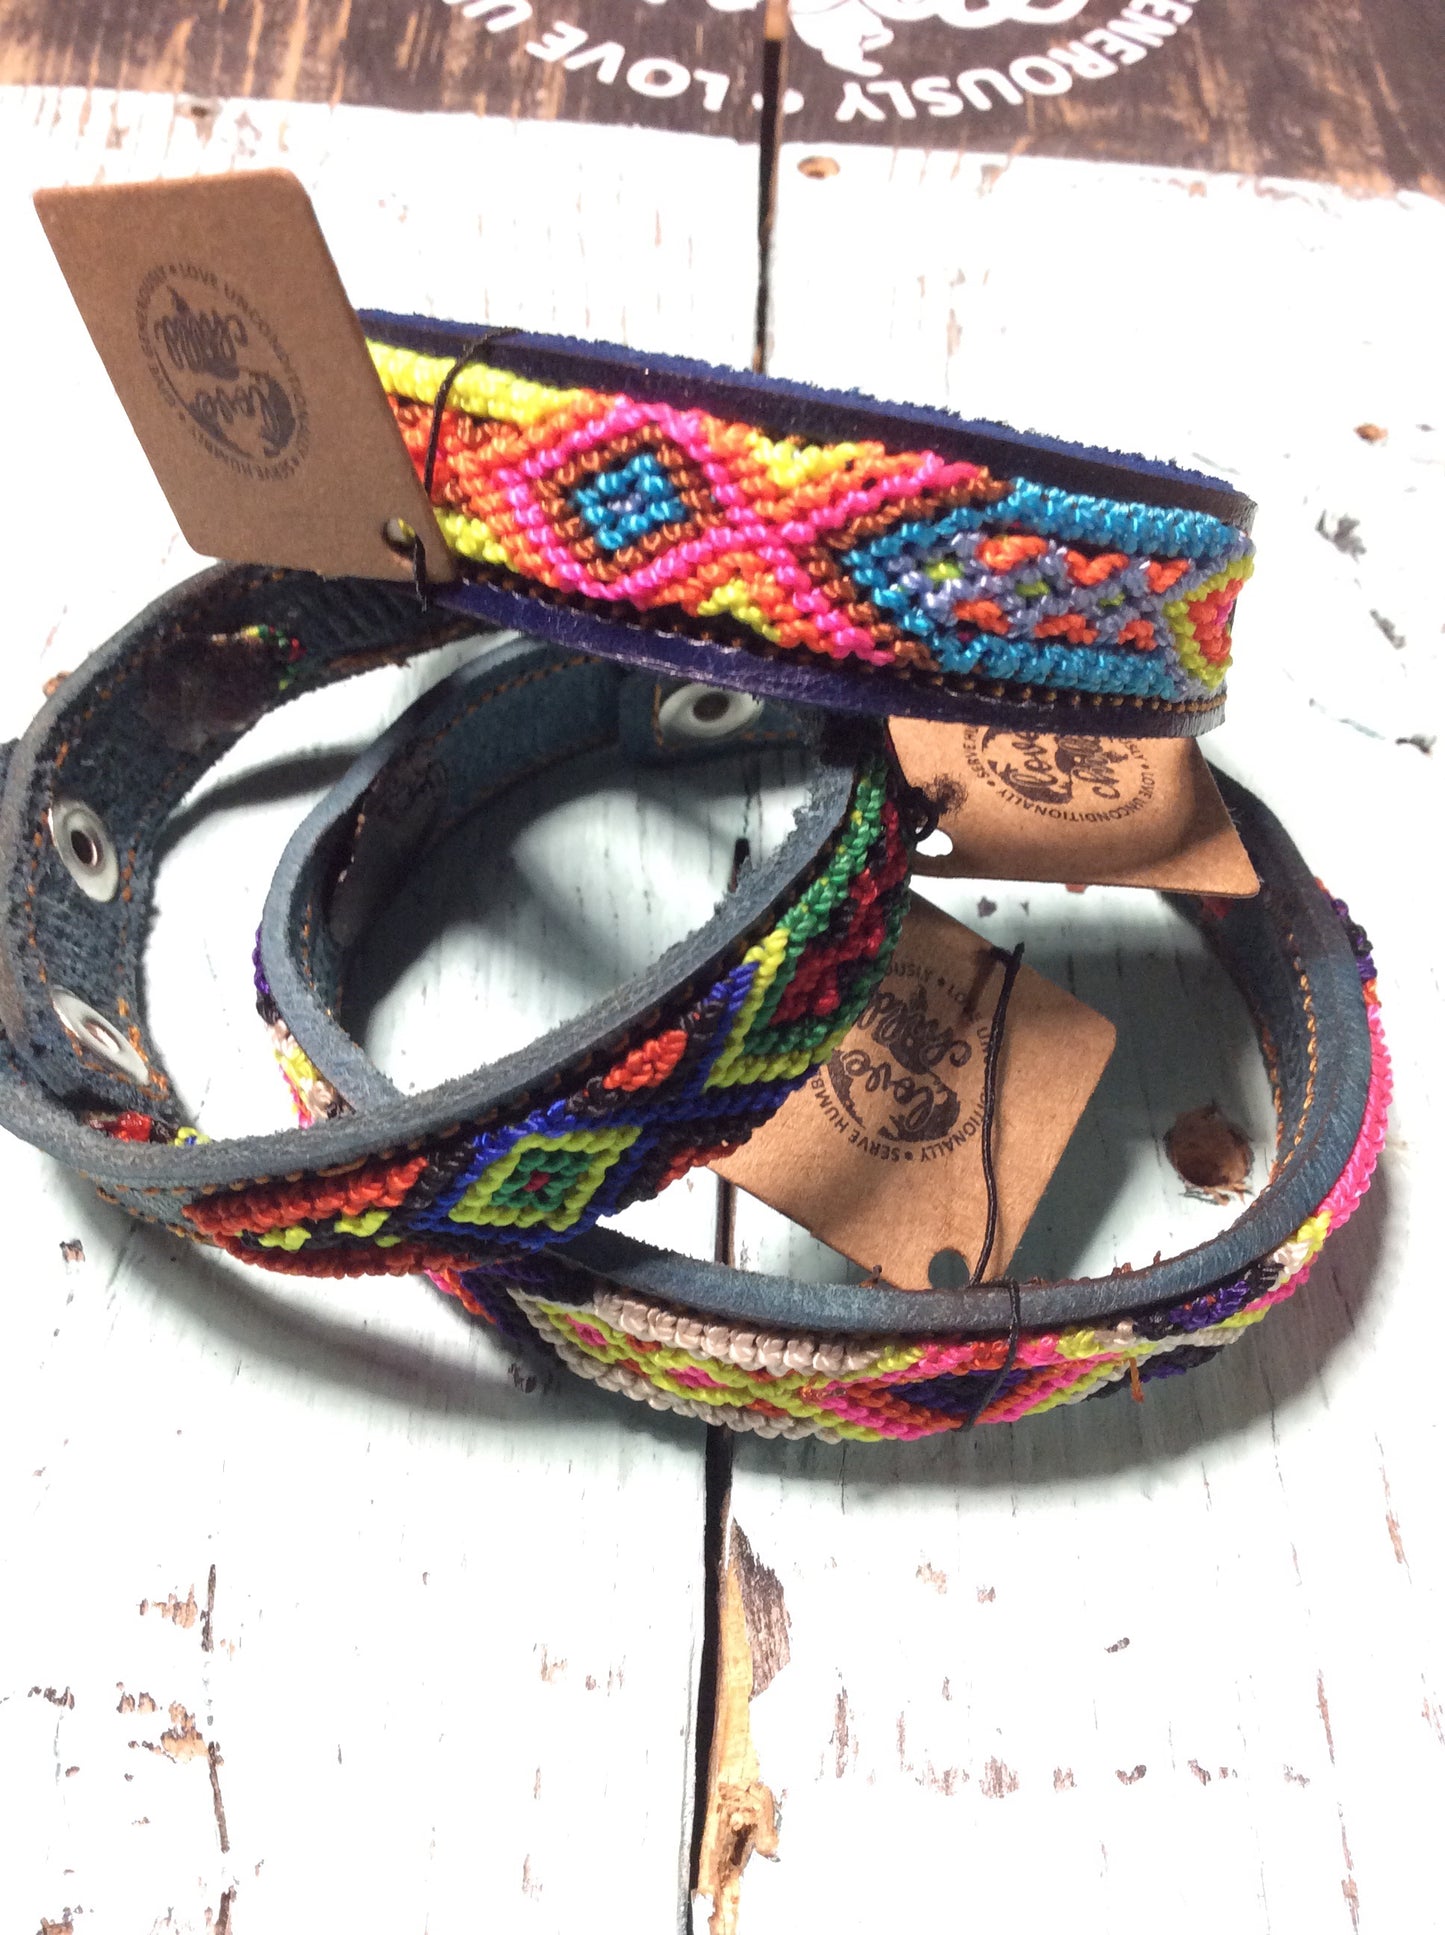 Guatemalan Leather Bracelet